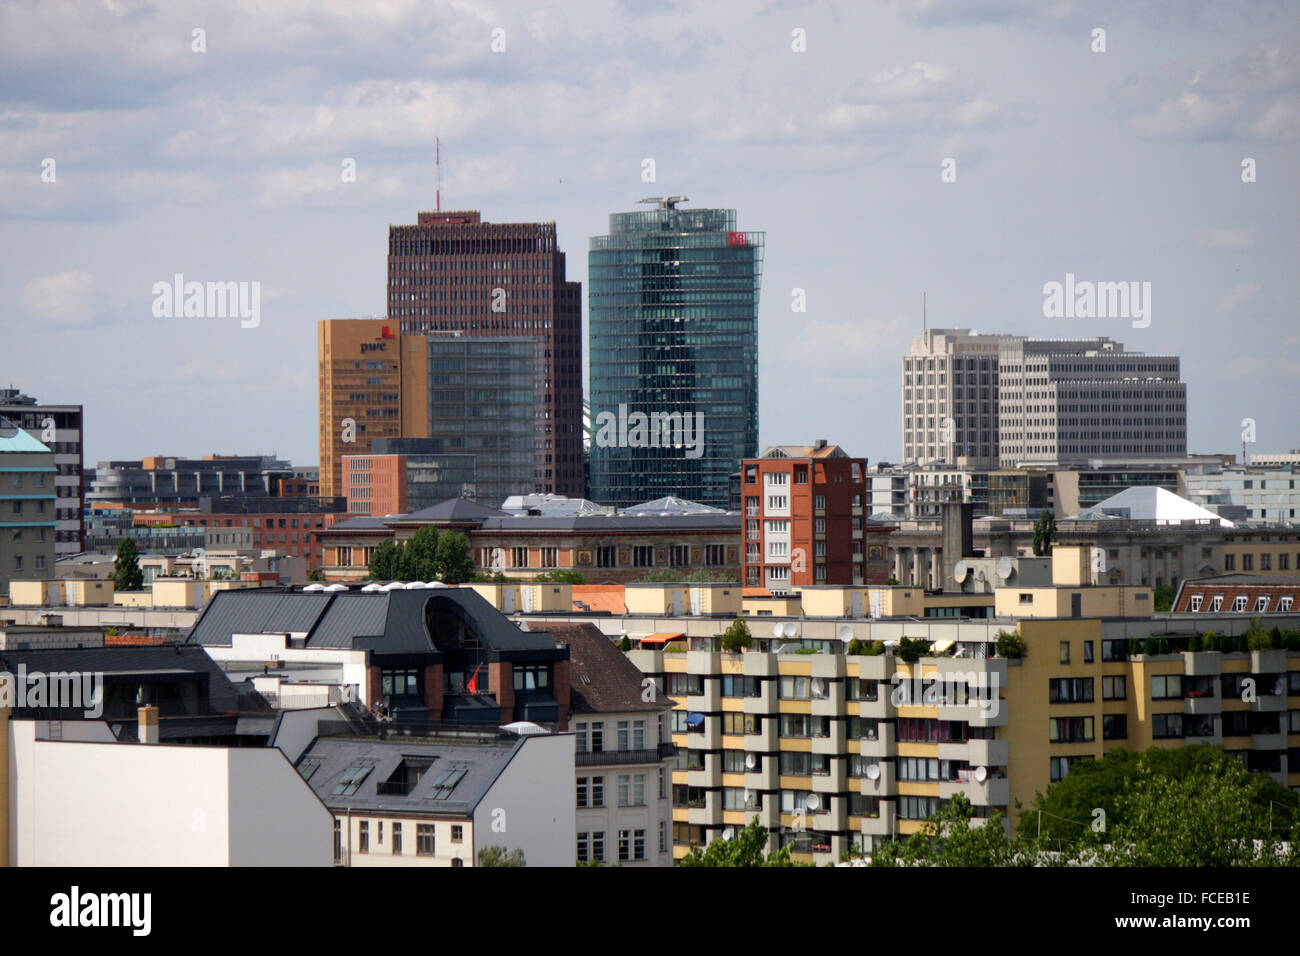 Luftbild: die Hochhaeuser vom Potsdamer Platz, Berlin-Kreuzberg. Stock Photo